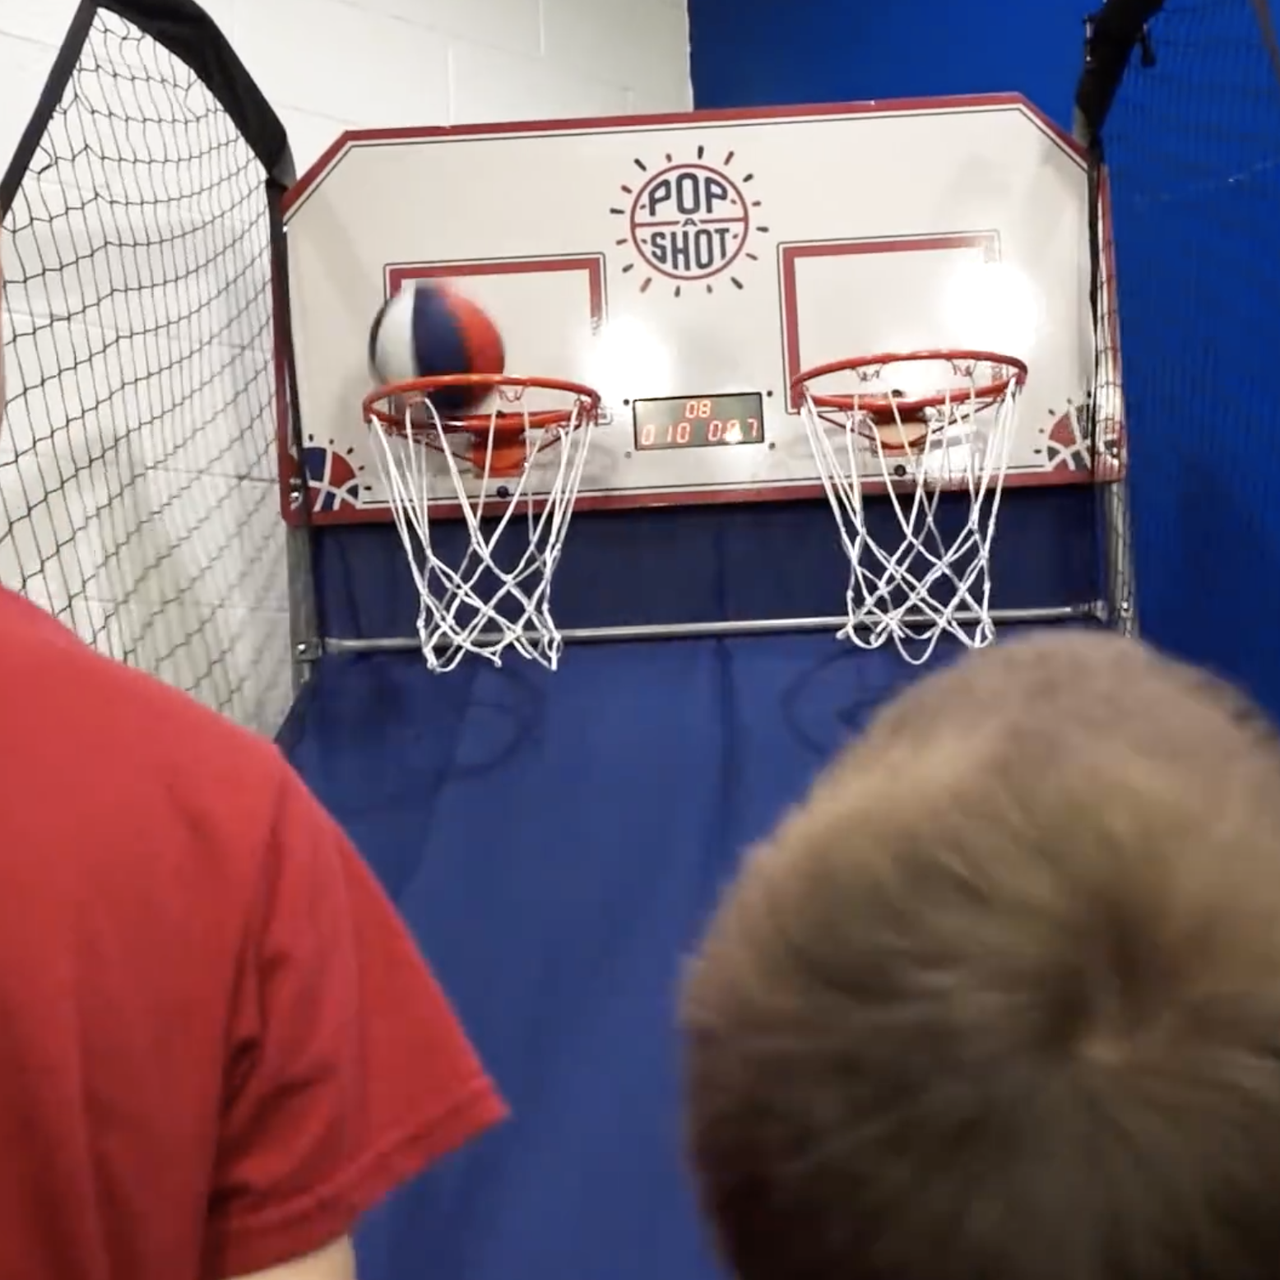 Pop-A-Shot Dual Shot Basketball Arcade Game